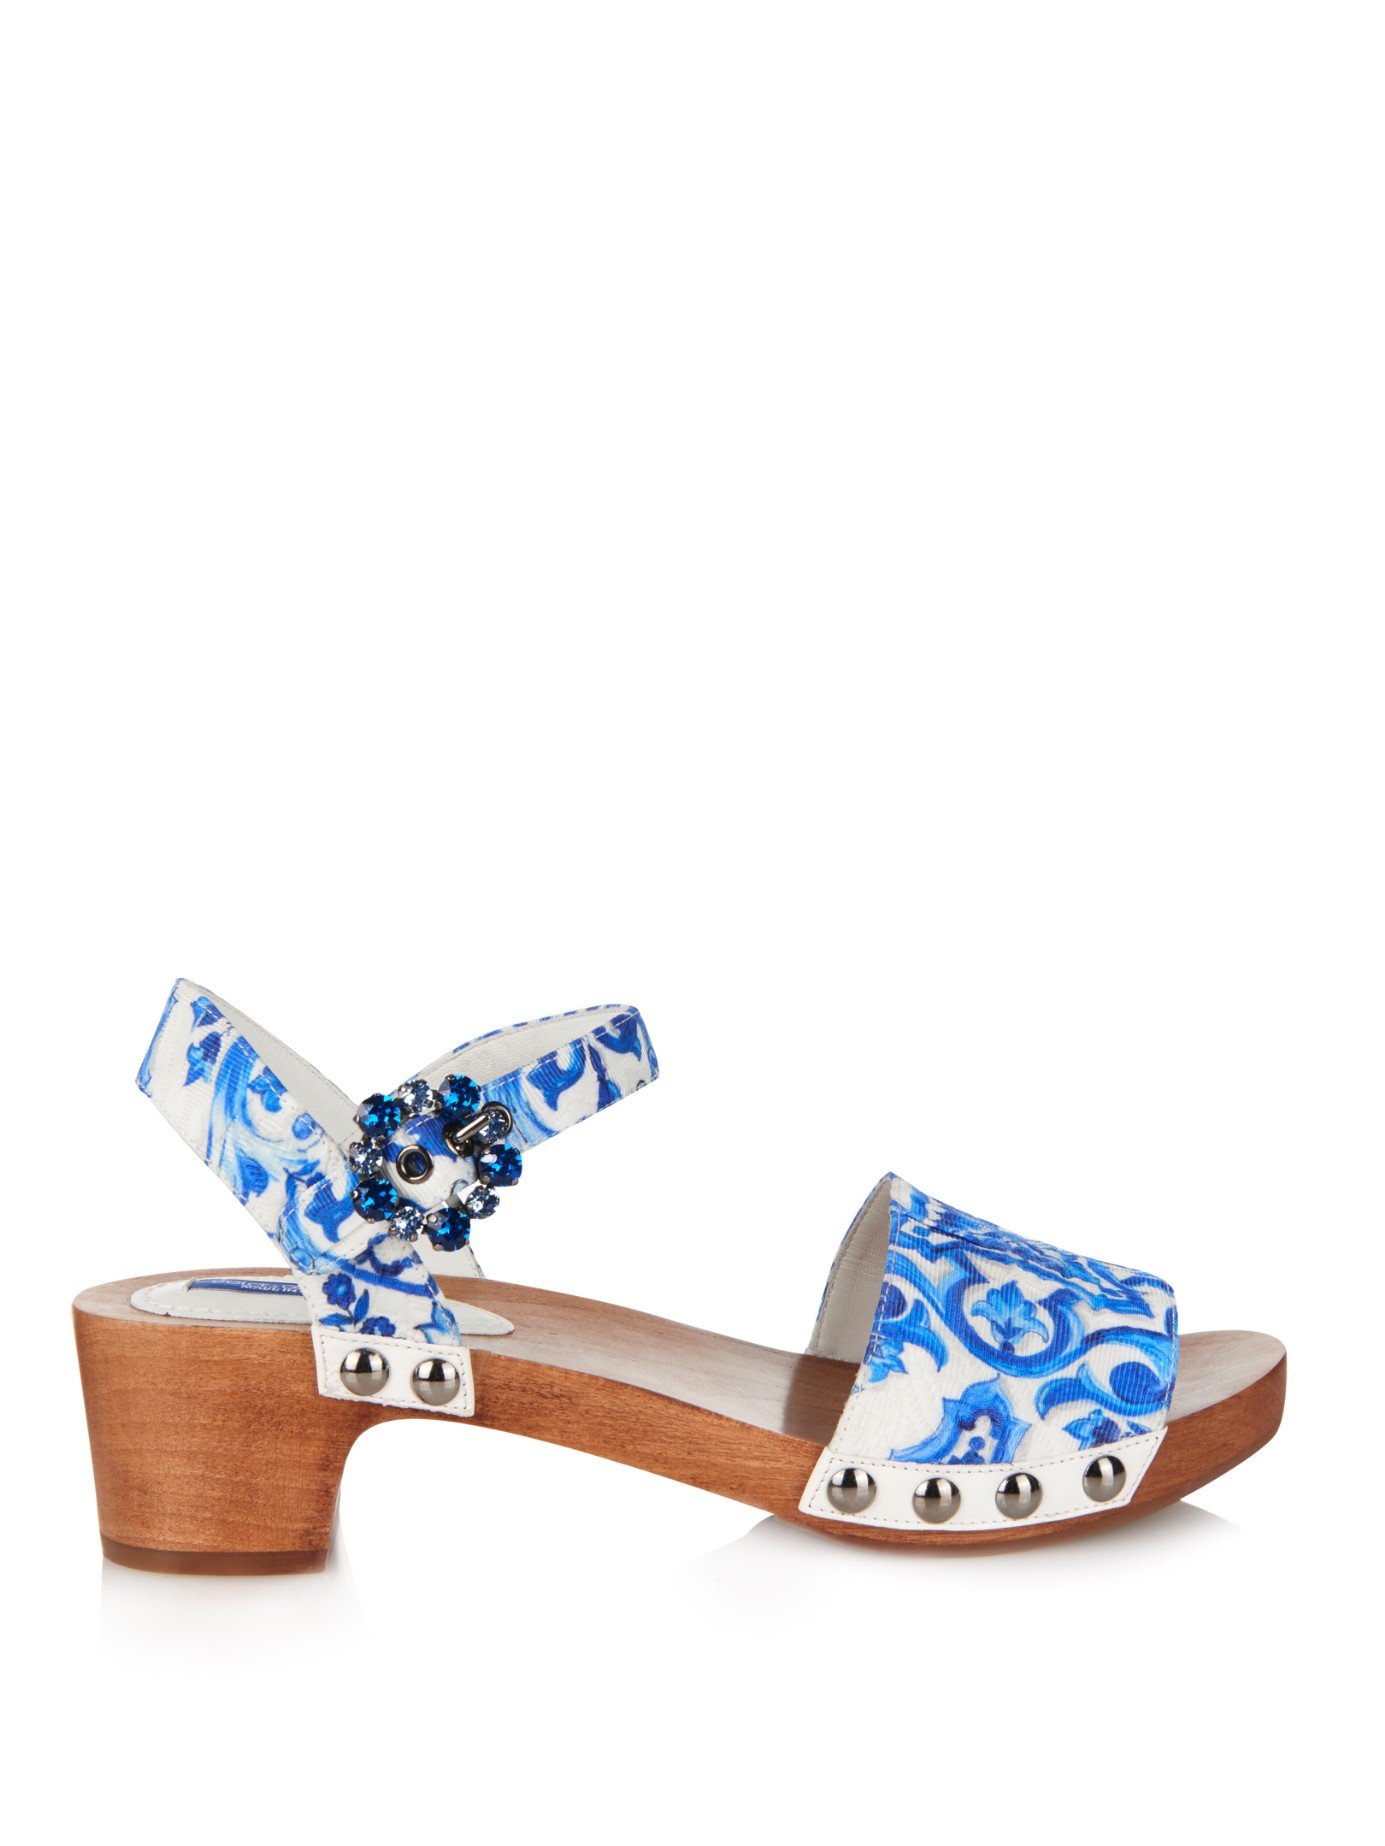 Lyst - Dolce & Gabbana Majolica-Print Brocade Sandals in Blue